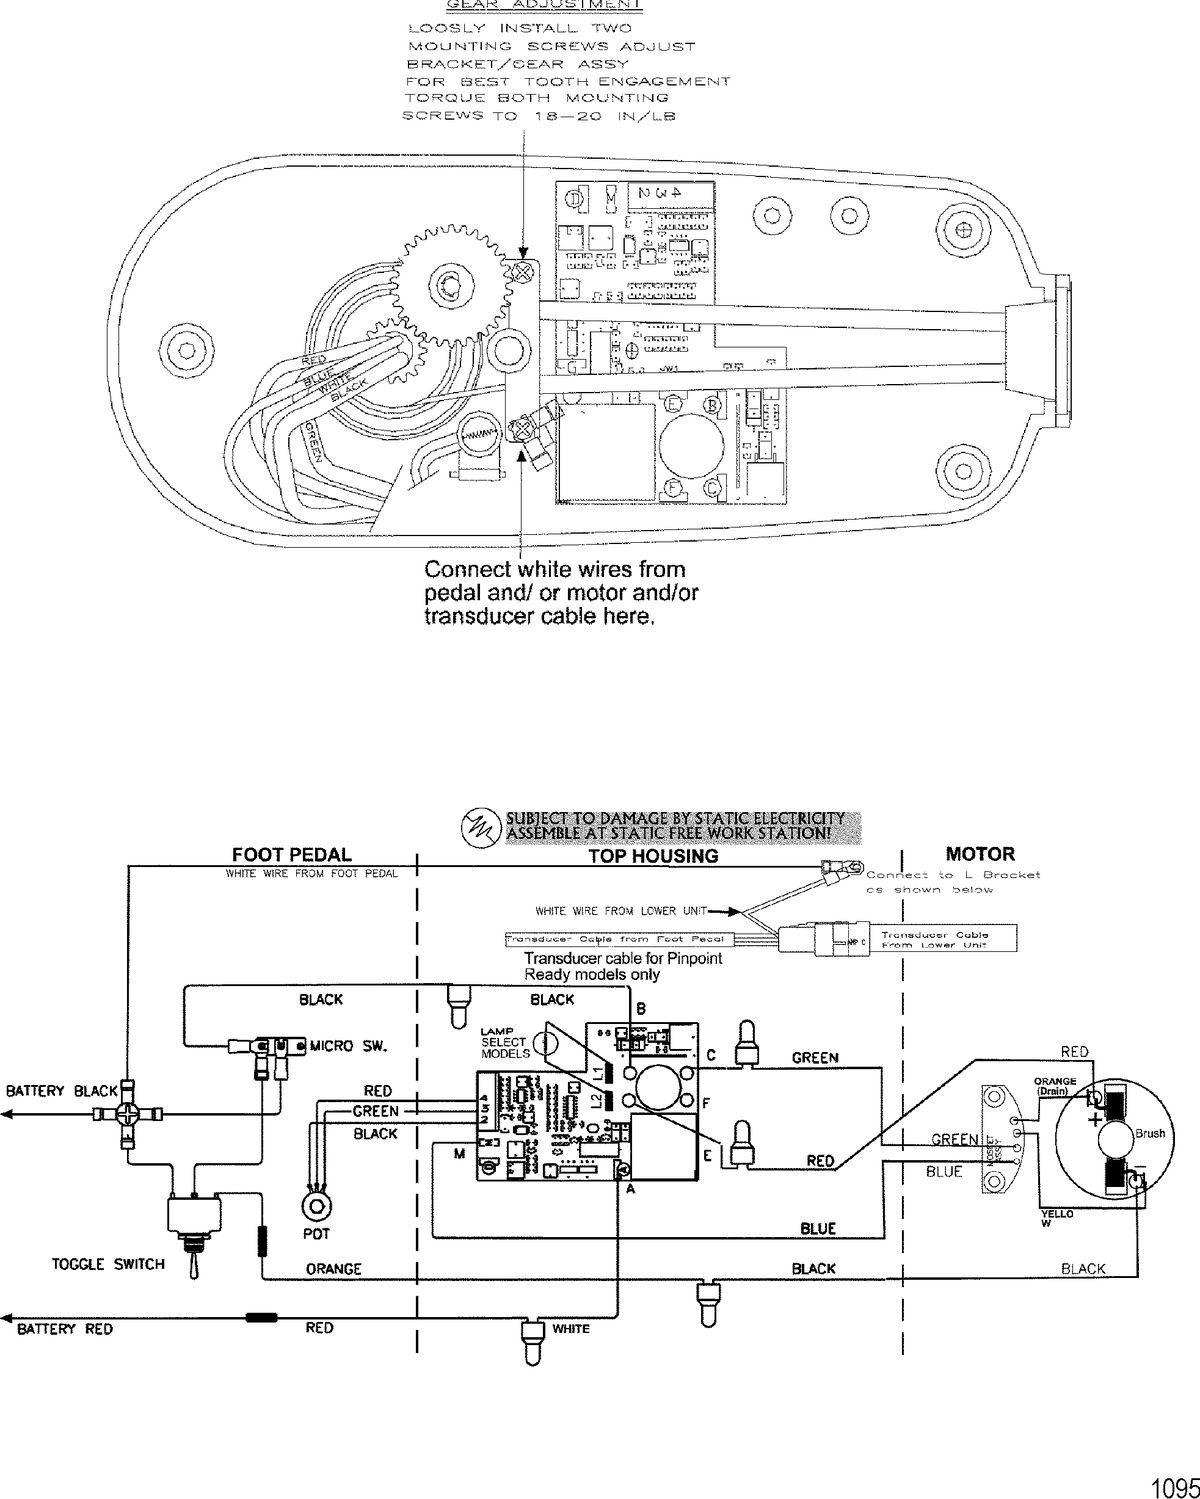 TROLLING MOTOR MOTORGUIDE TOUR EDITION SERIES Wire Diagram(Model TE782VP) (24 Volt)